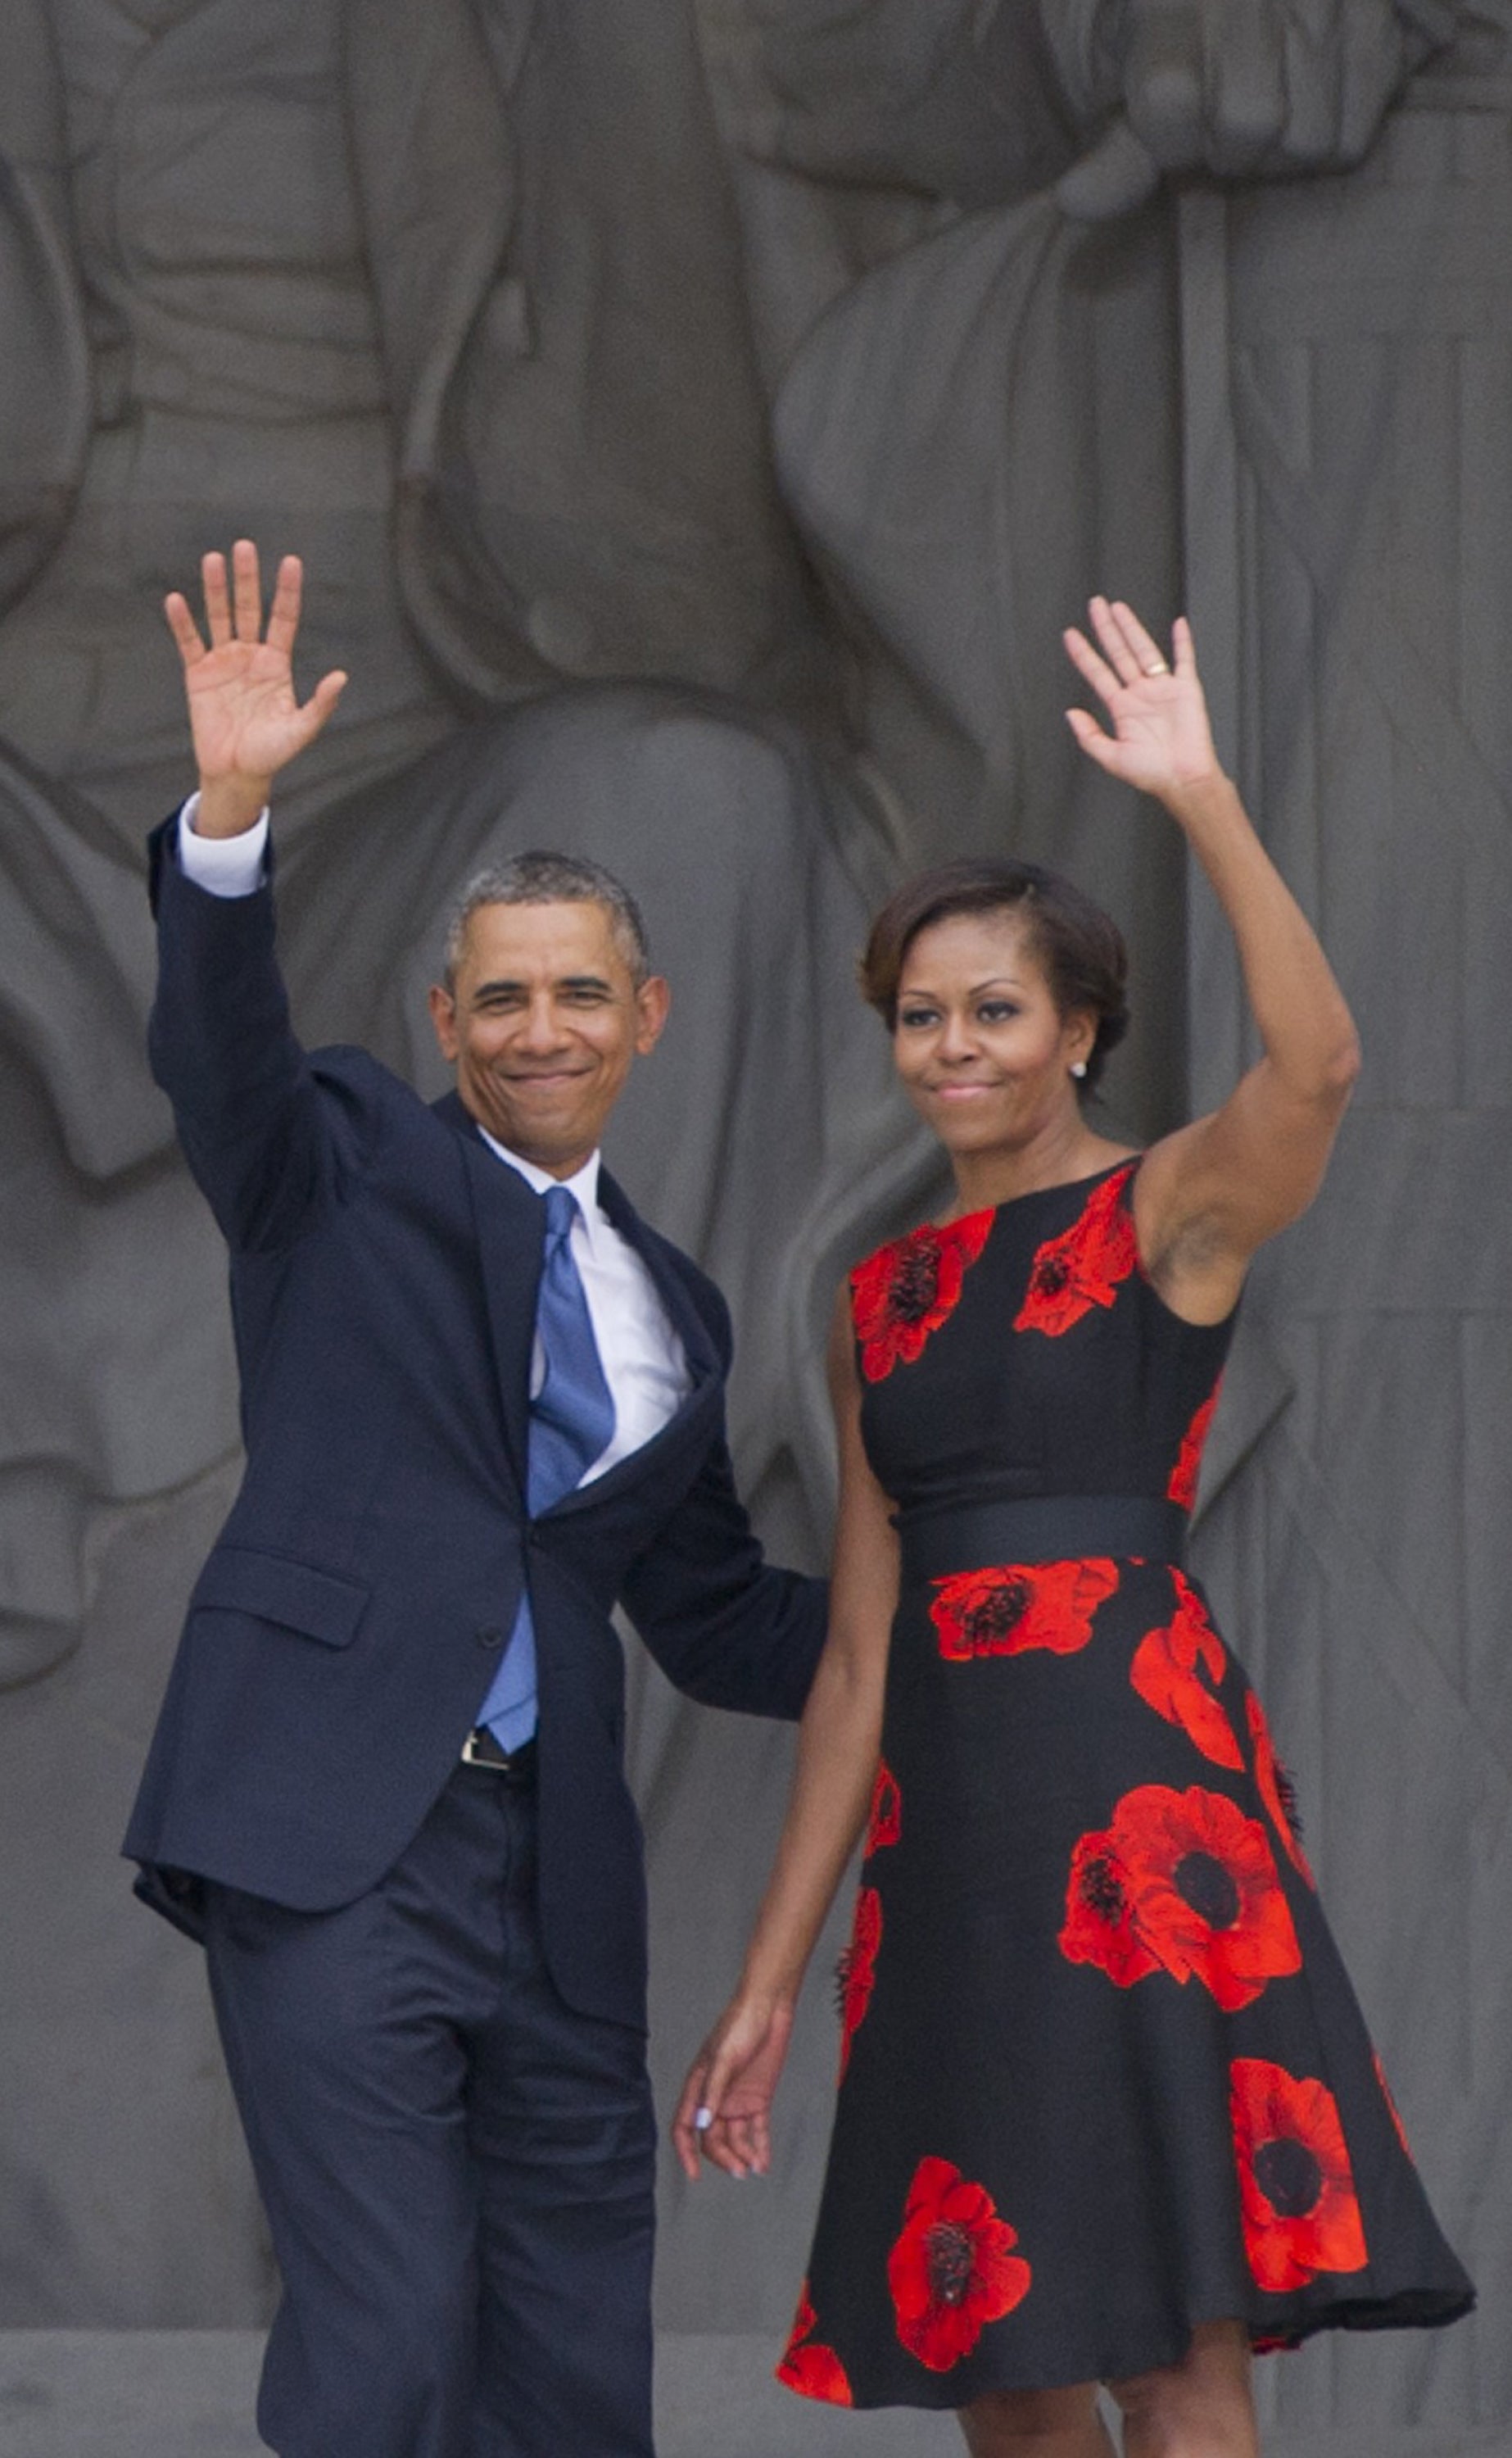 15 Times Michelle Obama Rocked a Black Designer And Killed It
